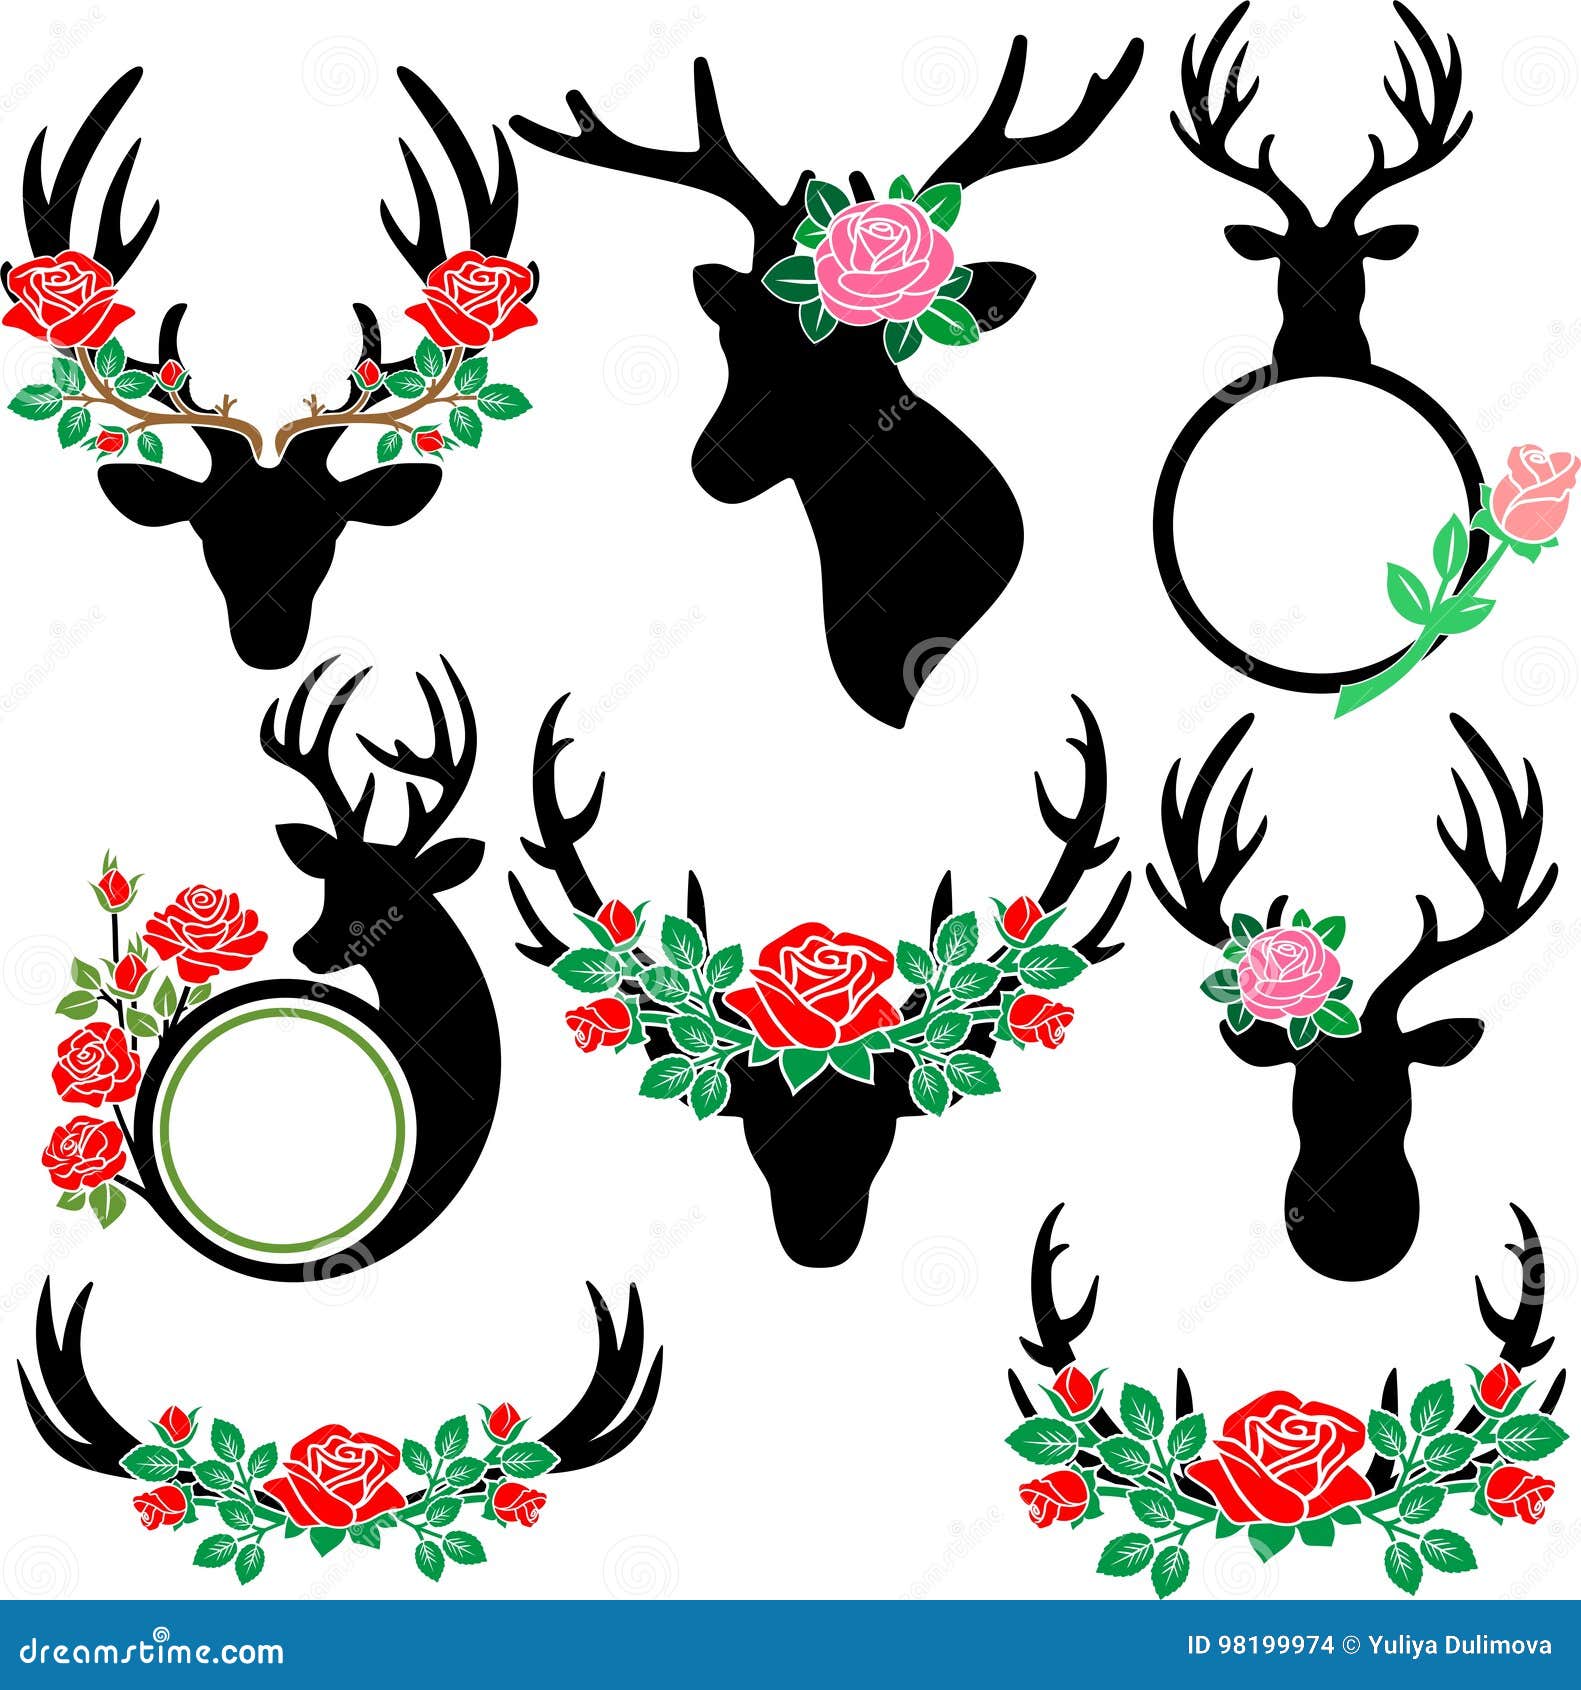 Download Floral Antlers And Deer Head Elements Stock Vector ...